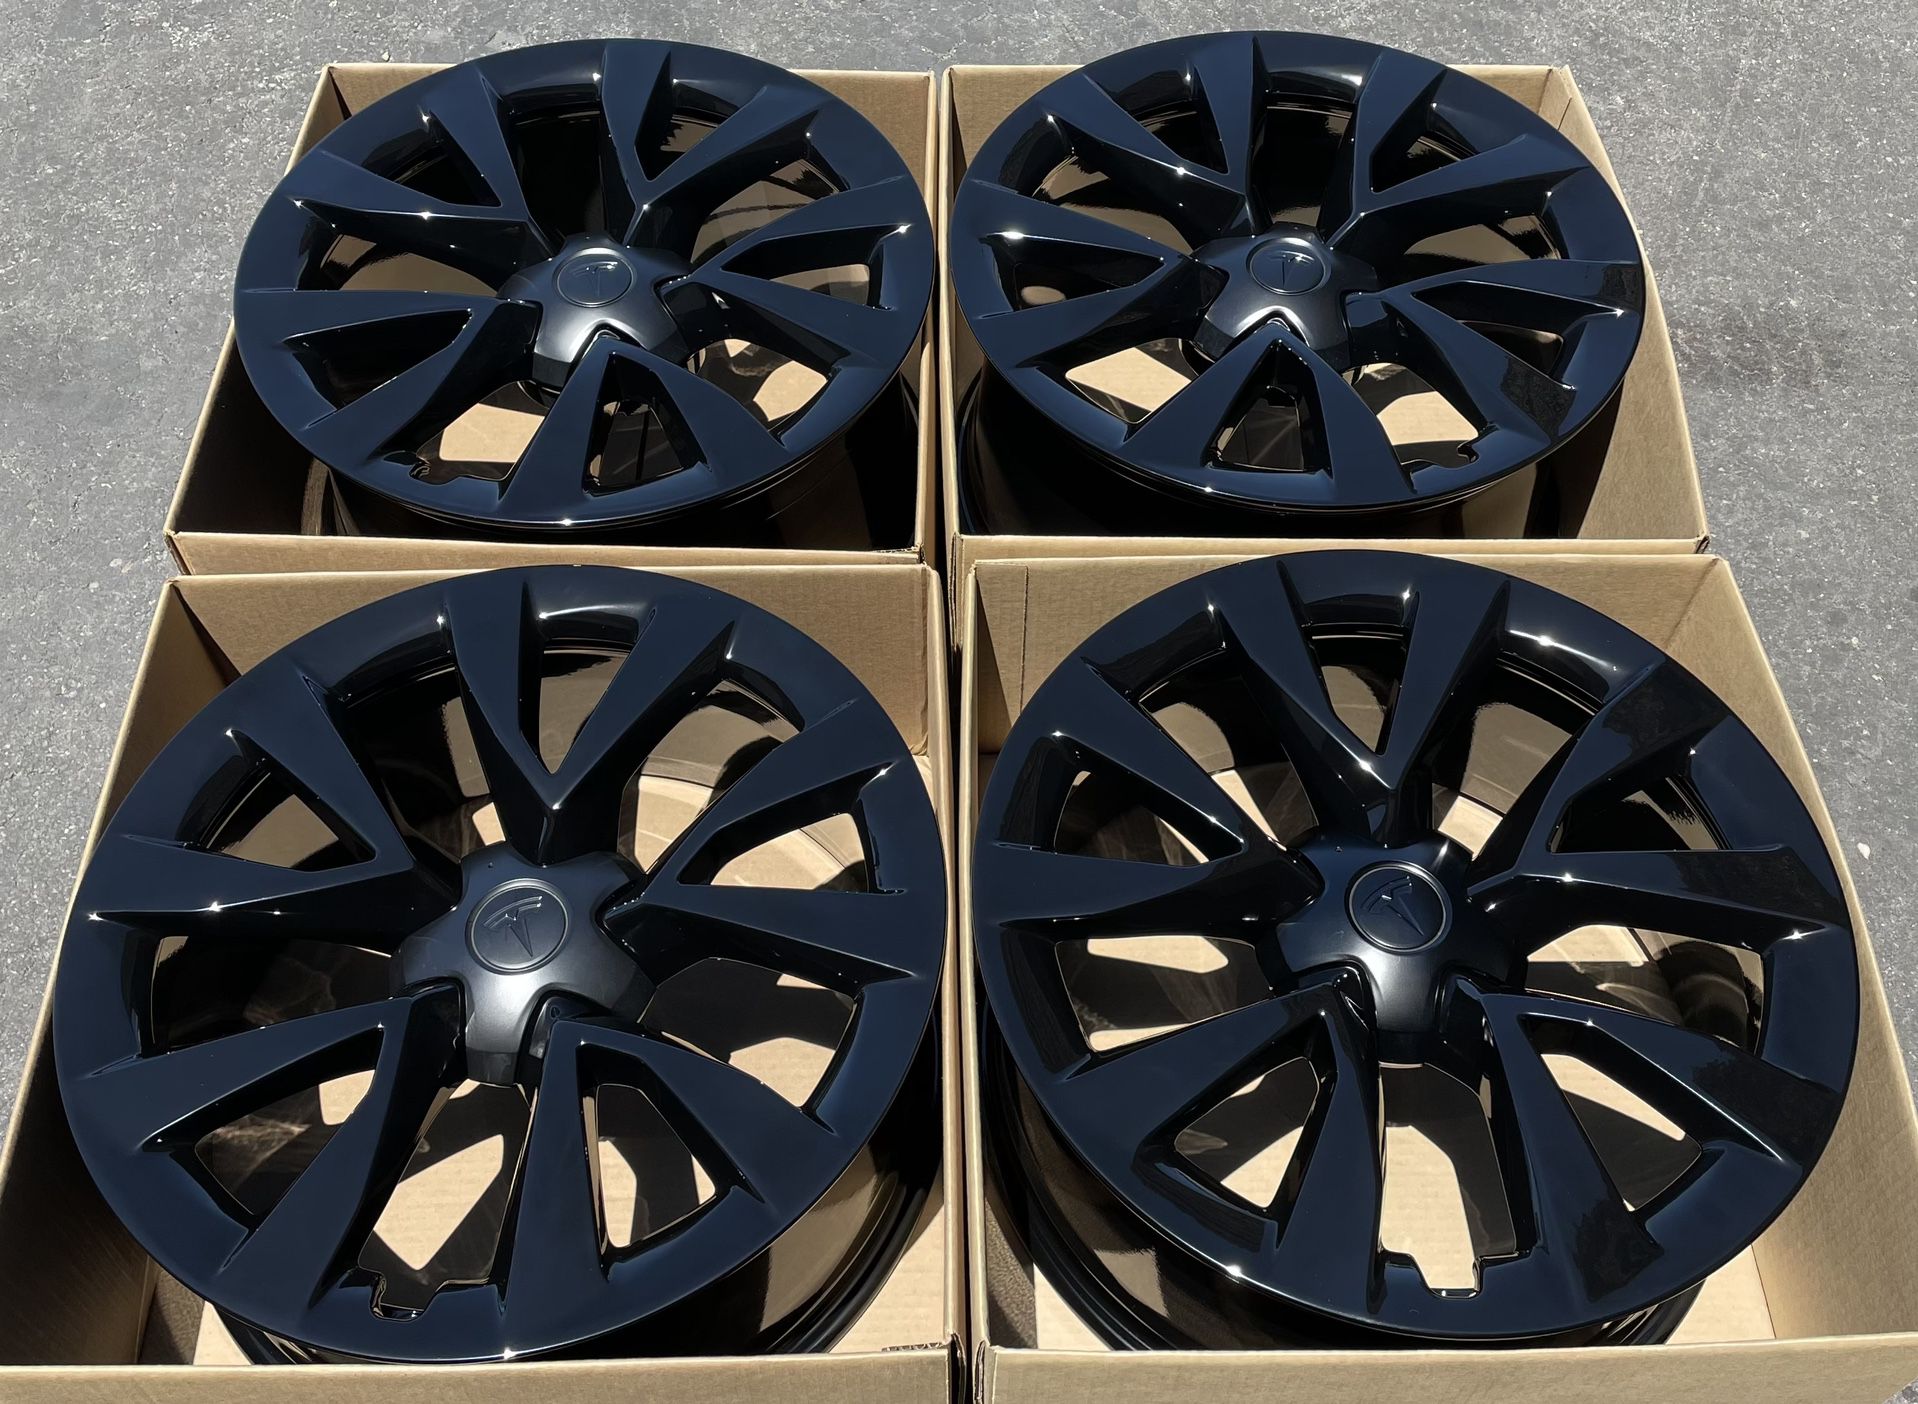 20” Tesla Model X factory wheels Rims Gloss Black New plaid